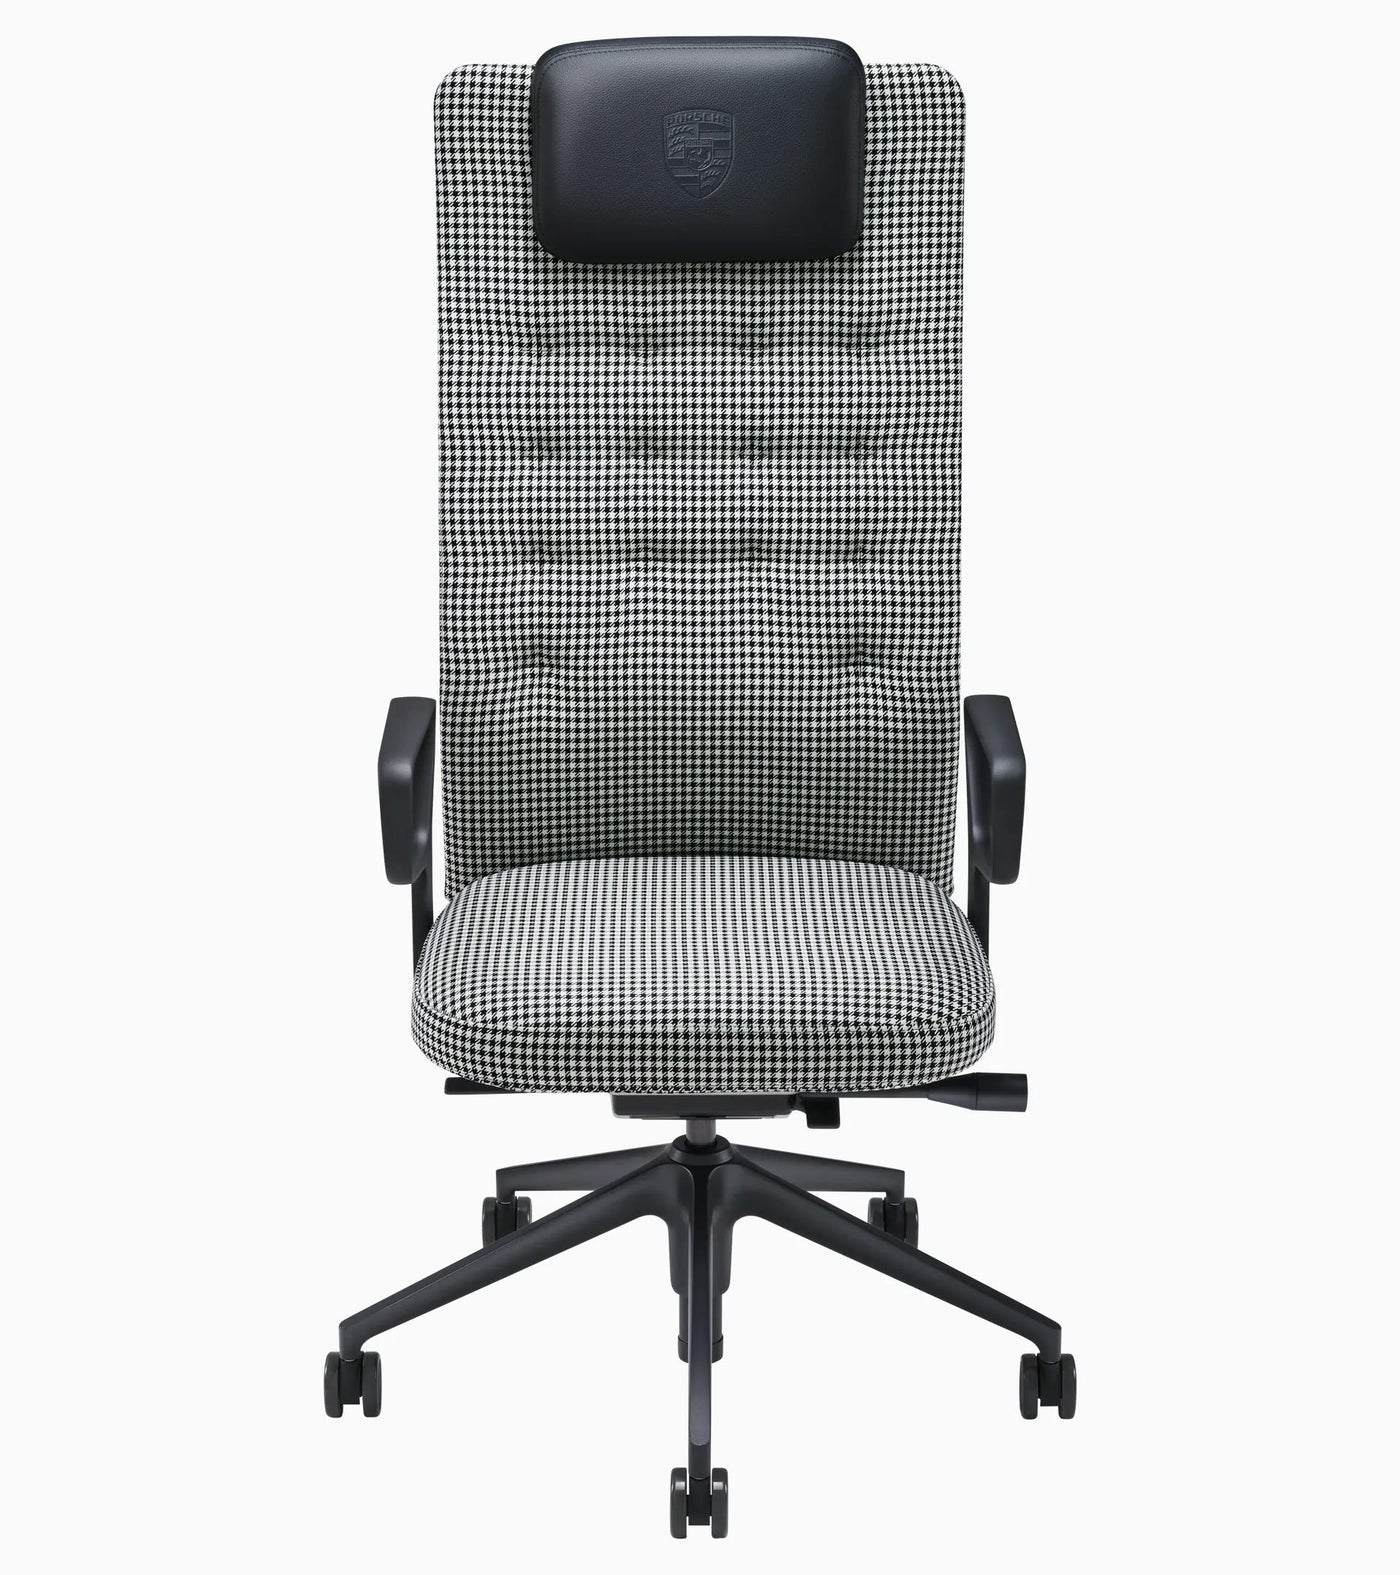 Porsche ID Trim L Pepita Edition Office Chair - Limited Edition